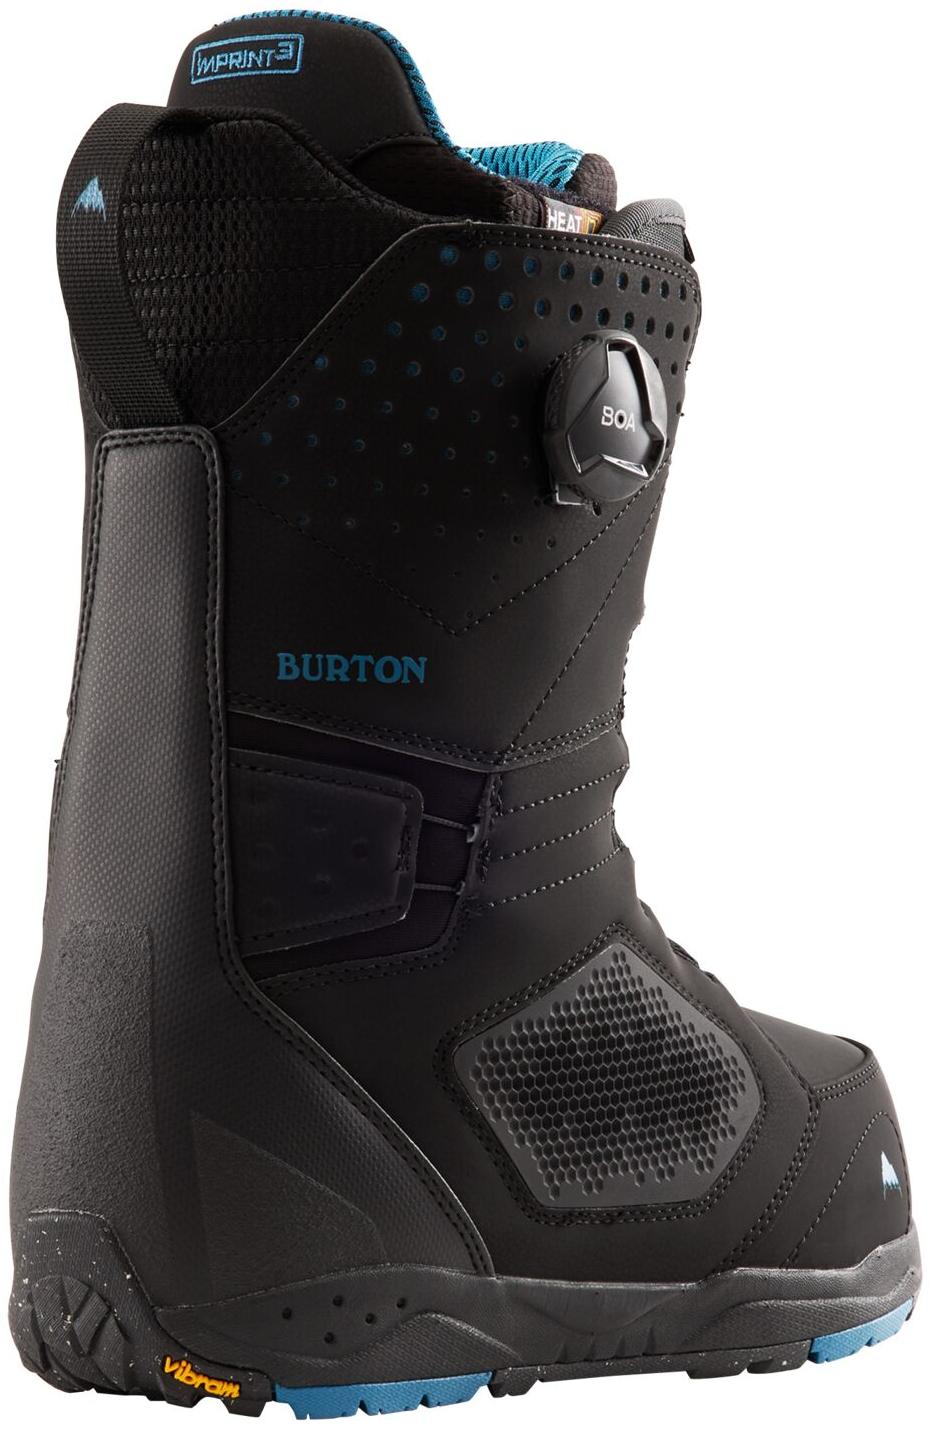 Ботинки для сноуборда BURTON 2021-22 Photon Boa Black